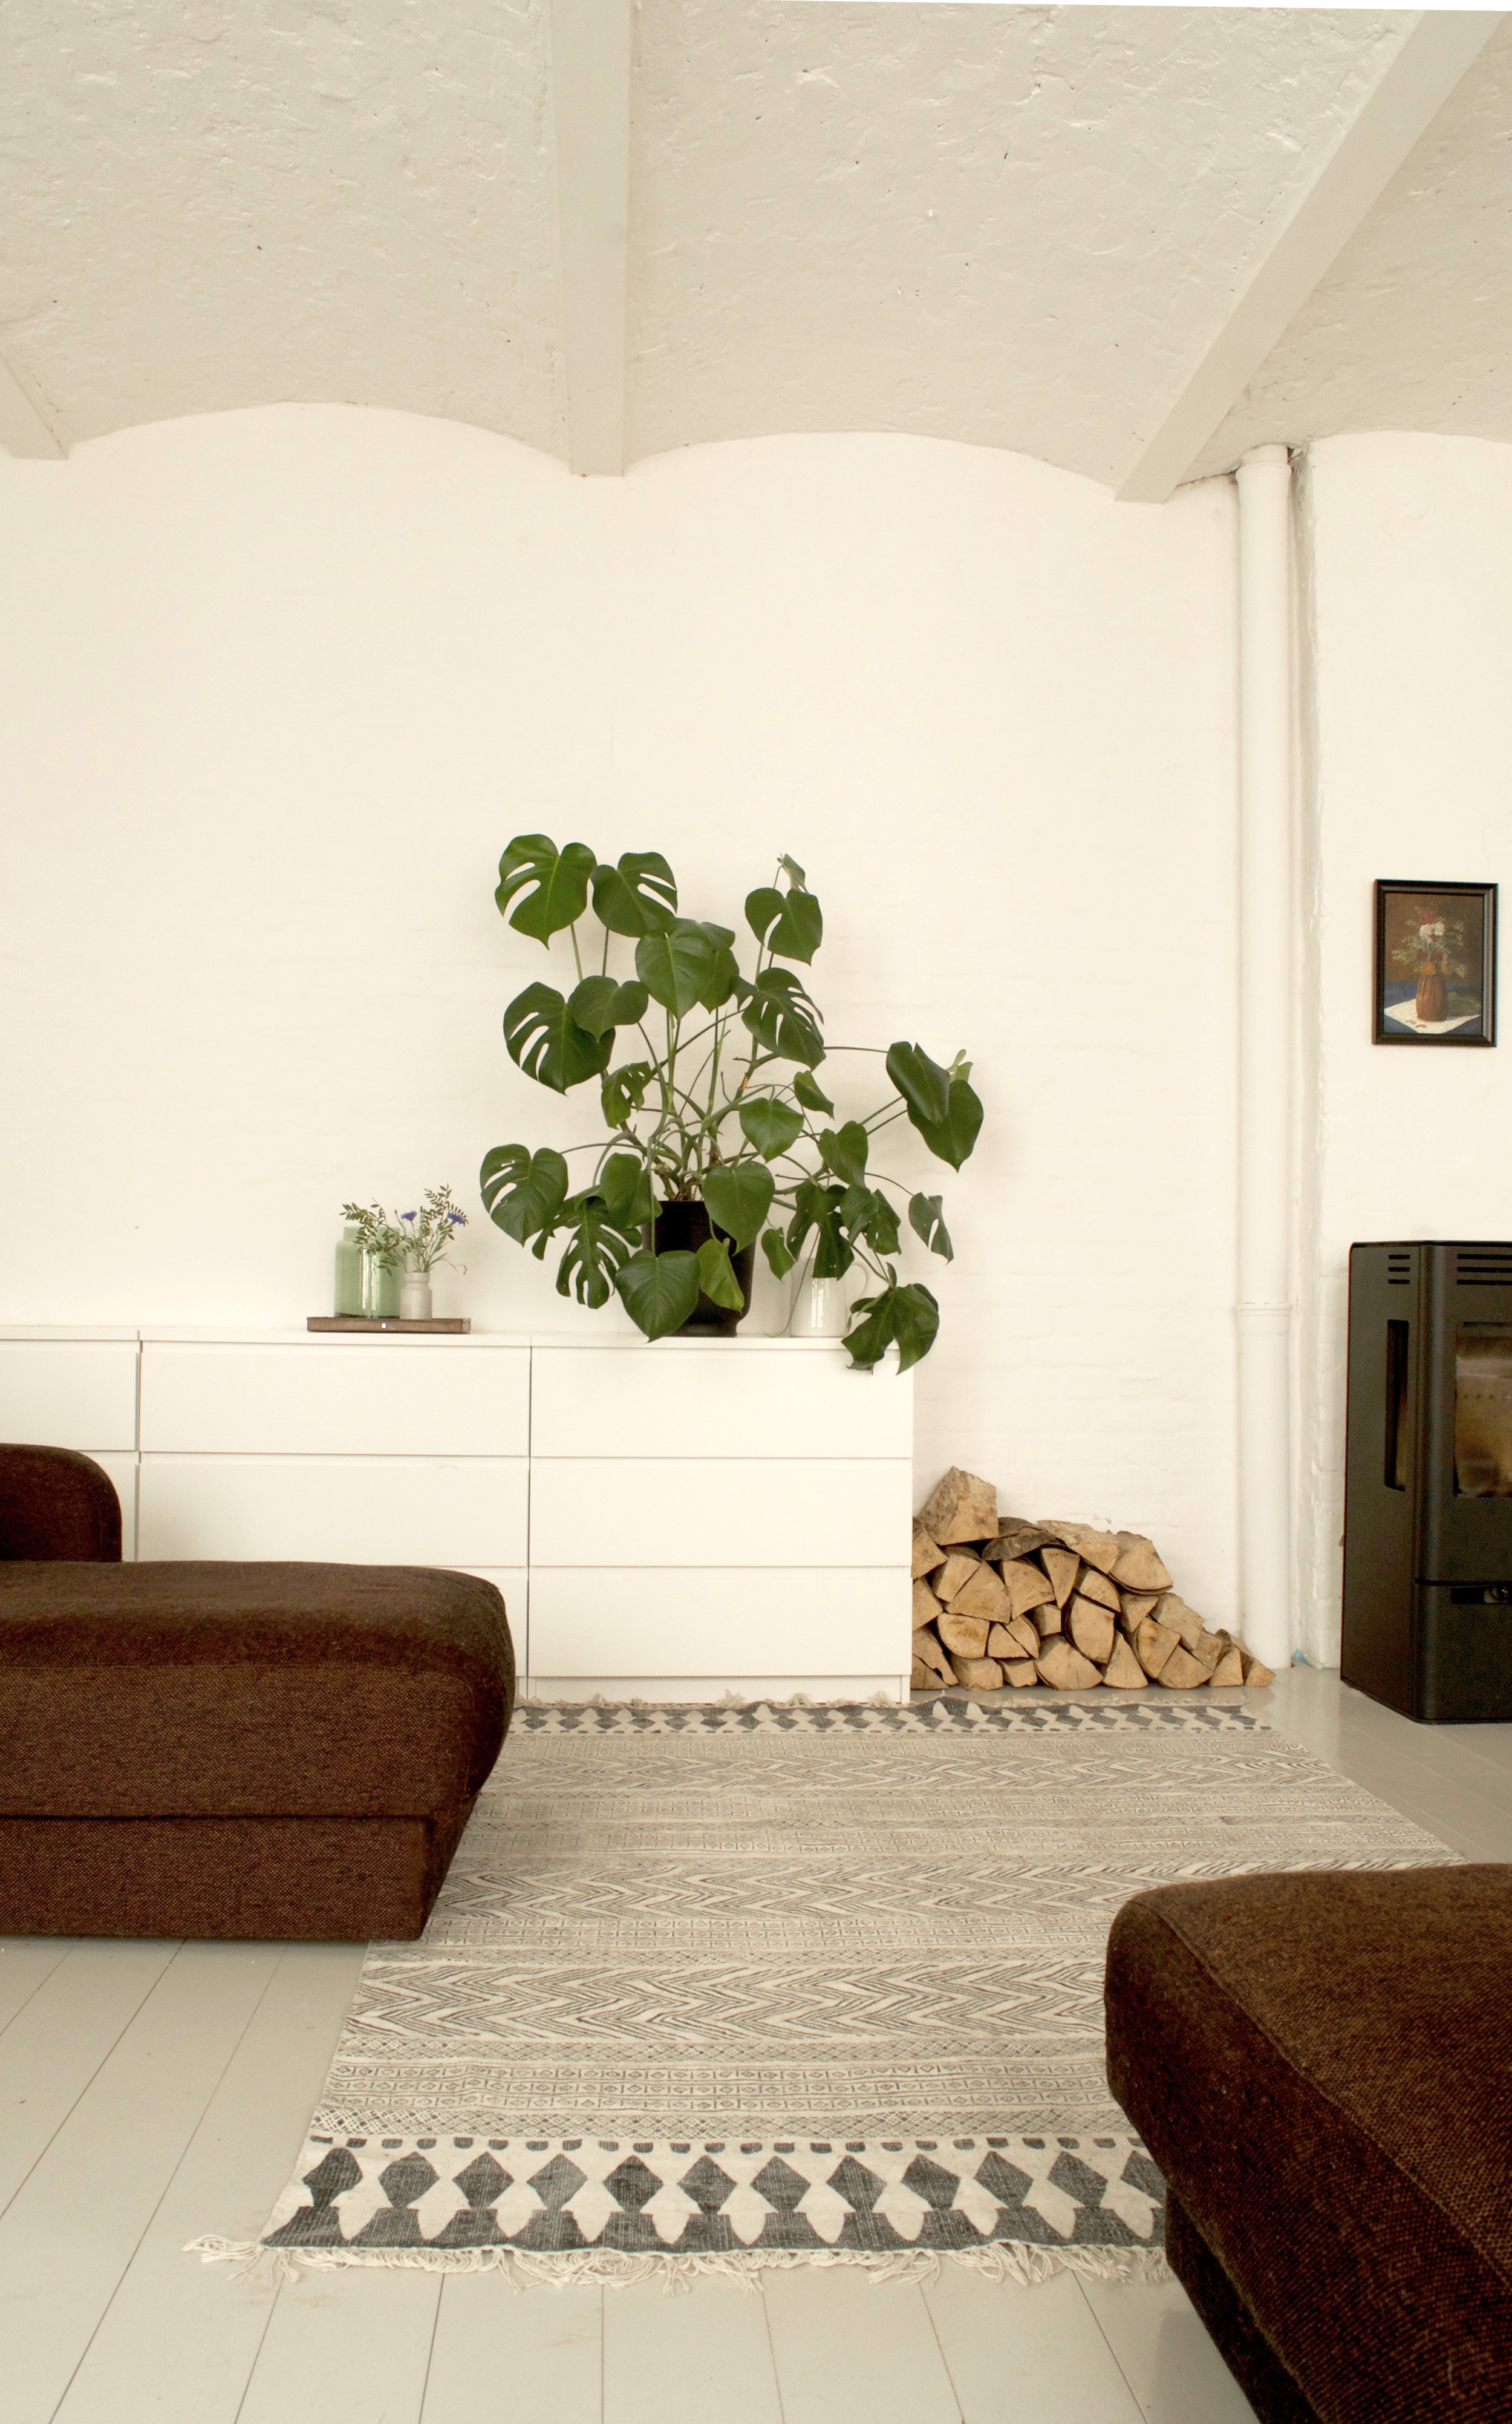 raini-peters-interior-design-and styling-berlin-wood-fire.jpg